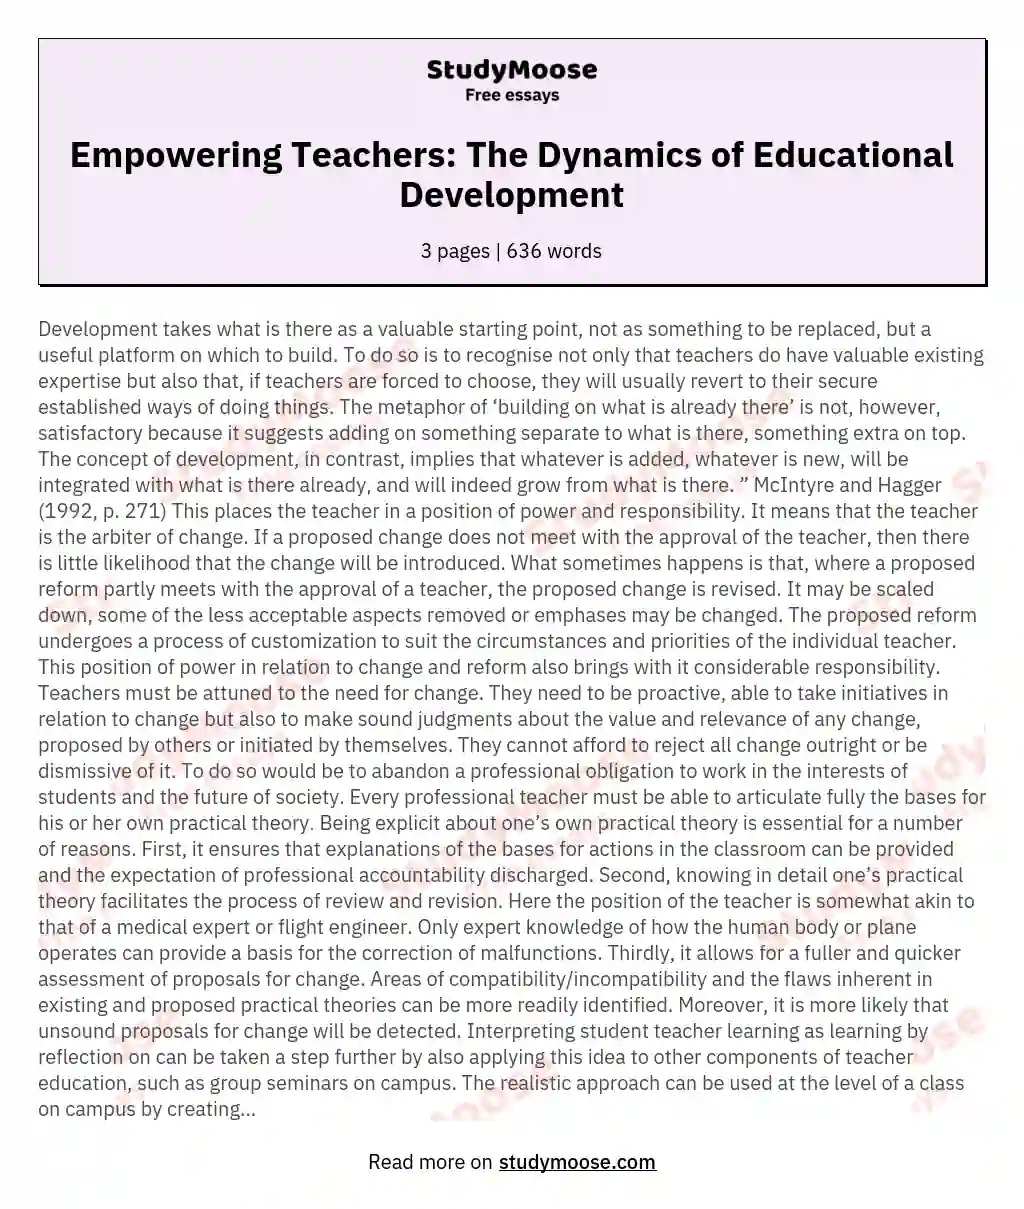 Empowering Teachers: The Dynamics of Educational Development essay